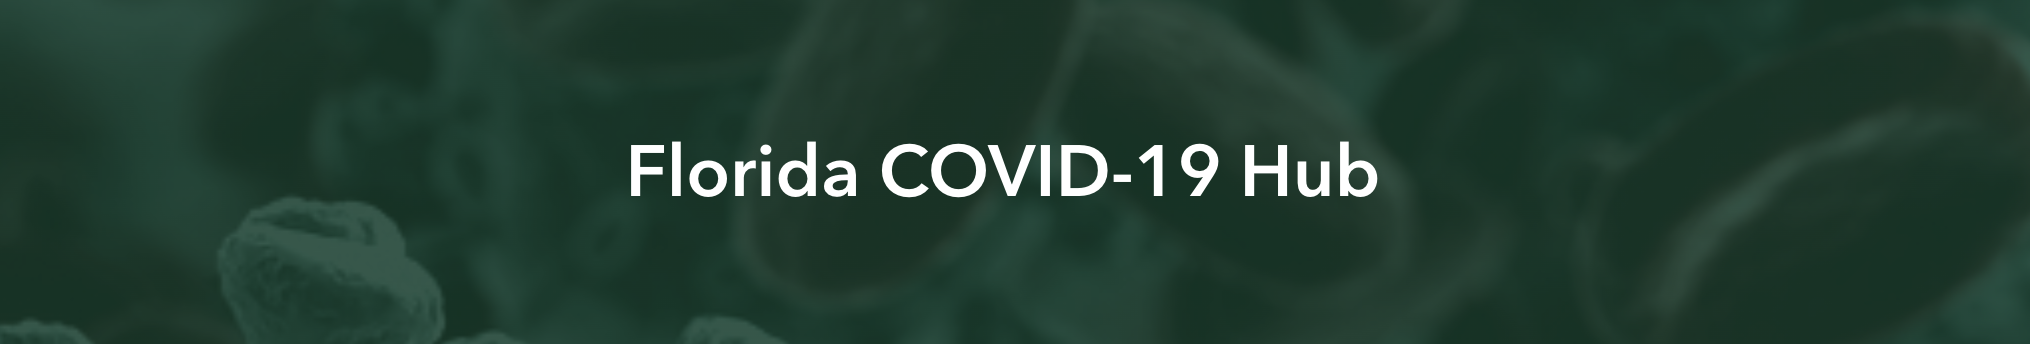 Florida COVID-19 Hub